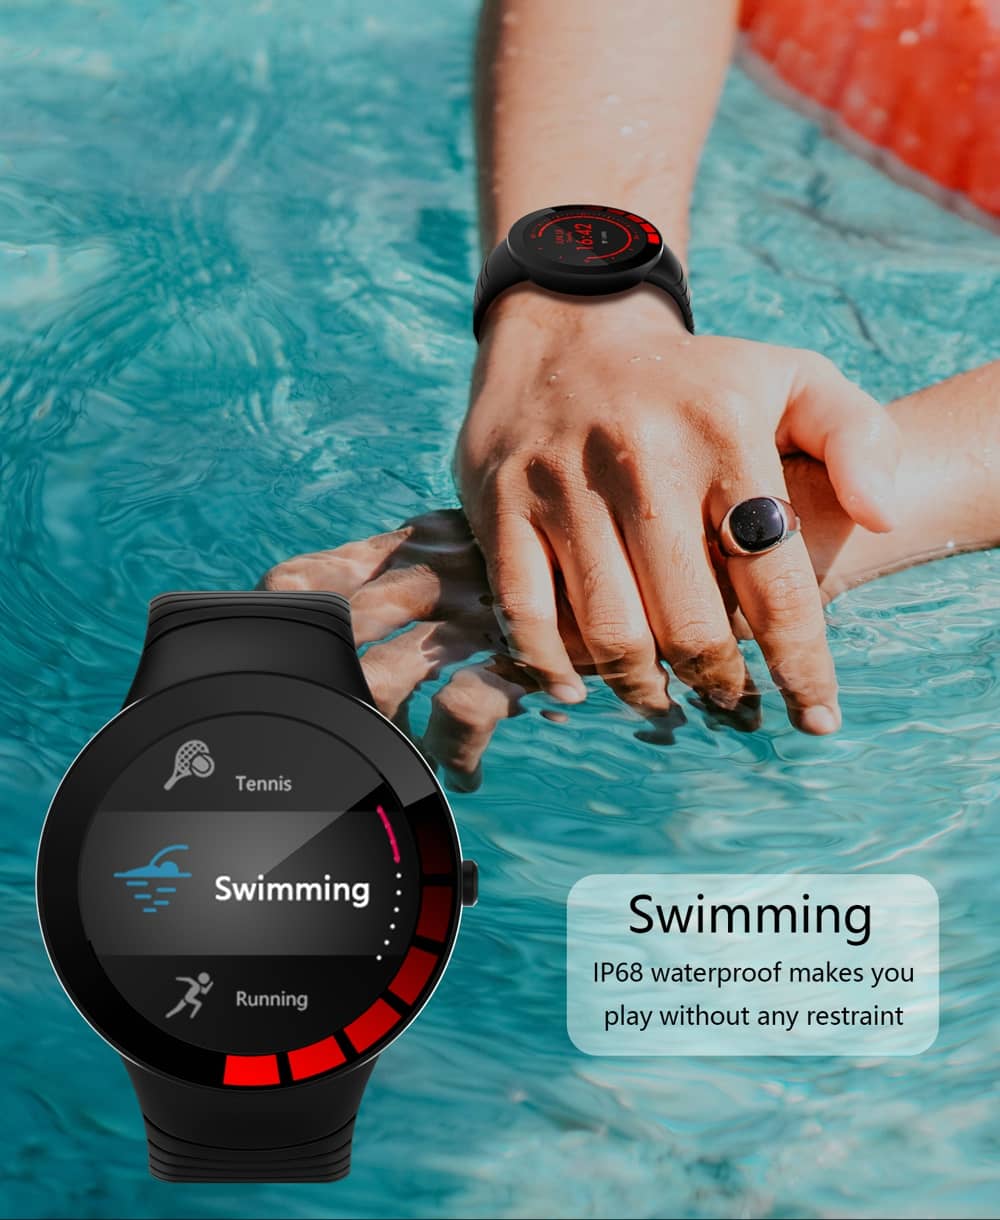 Blood Pressure Heart Rate Monitor Smart Watch IP68 Waterproof Message Reminder Stopwatch Pedometer - Findtime